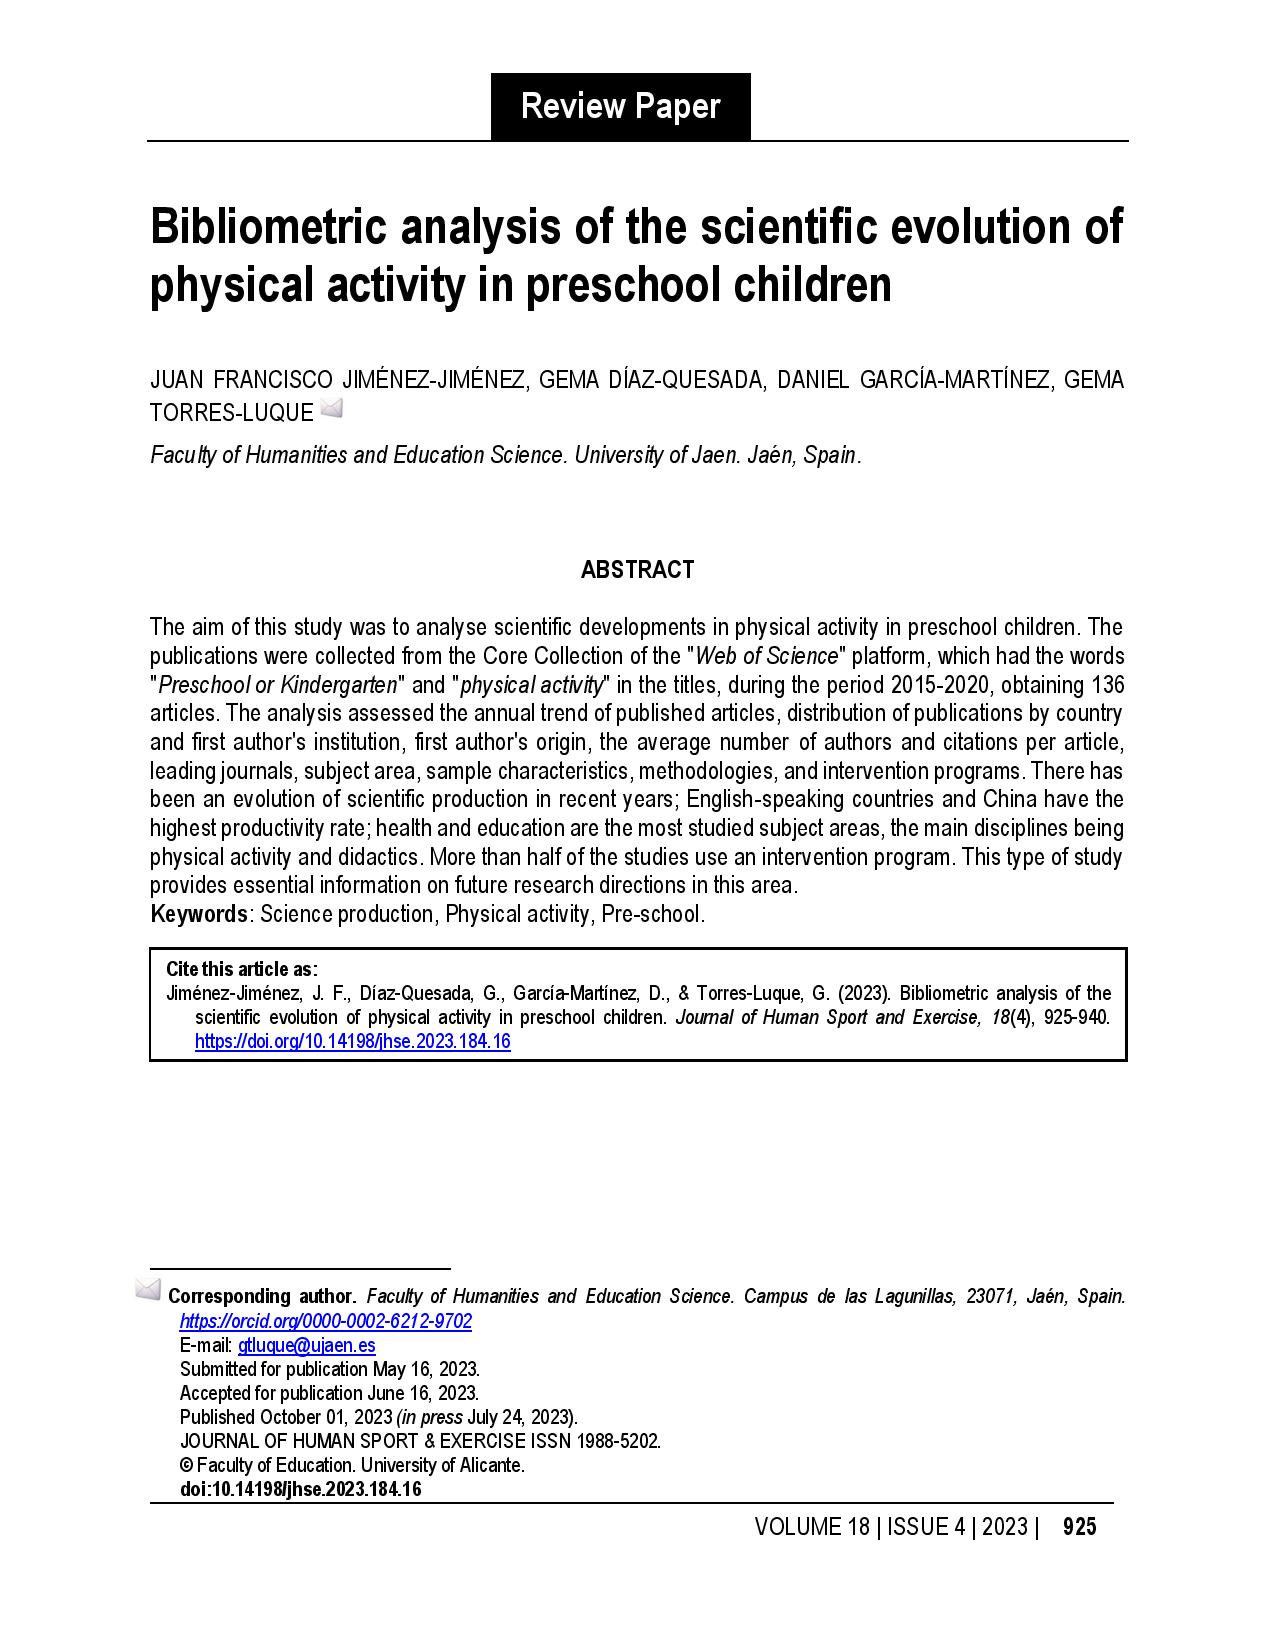 Bibliometric analysis of the scientific evolution of physical activity in preschool children